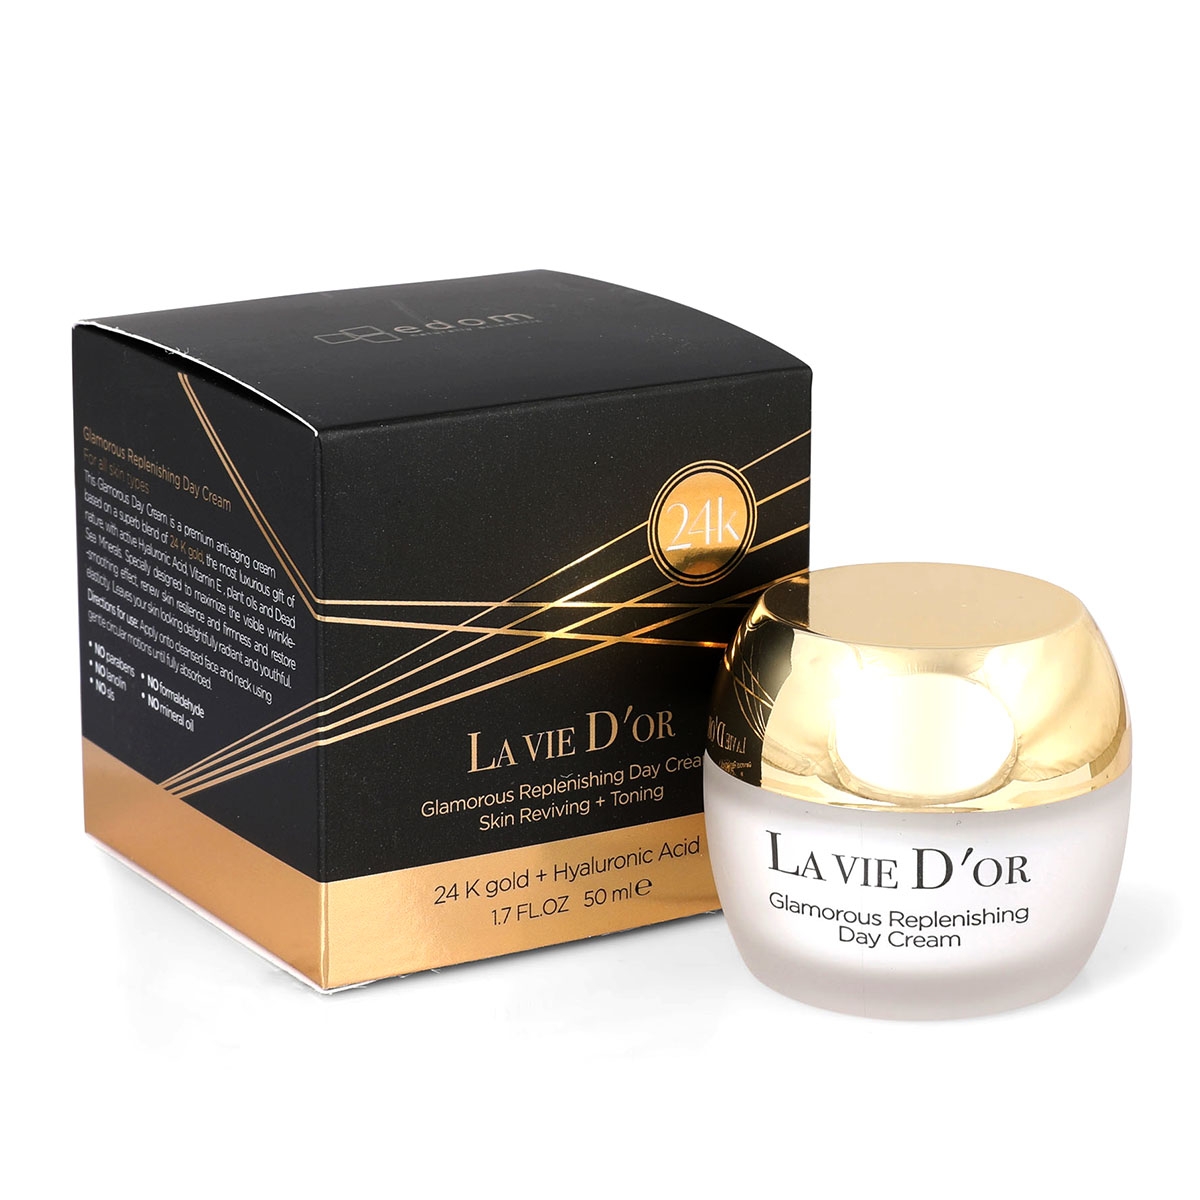 Edom La Vie D’Or Glamorous Replenishing Day Cream - 1